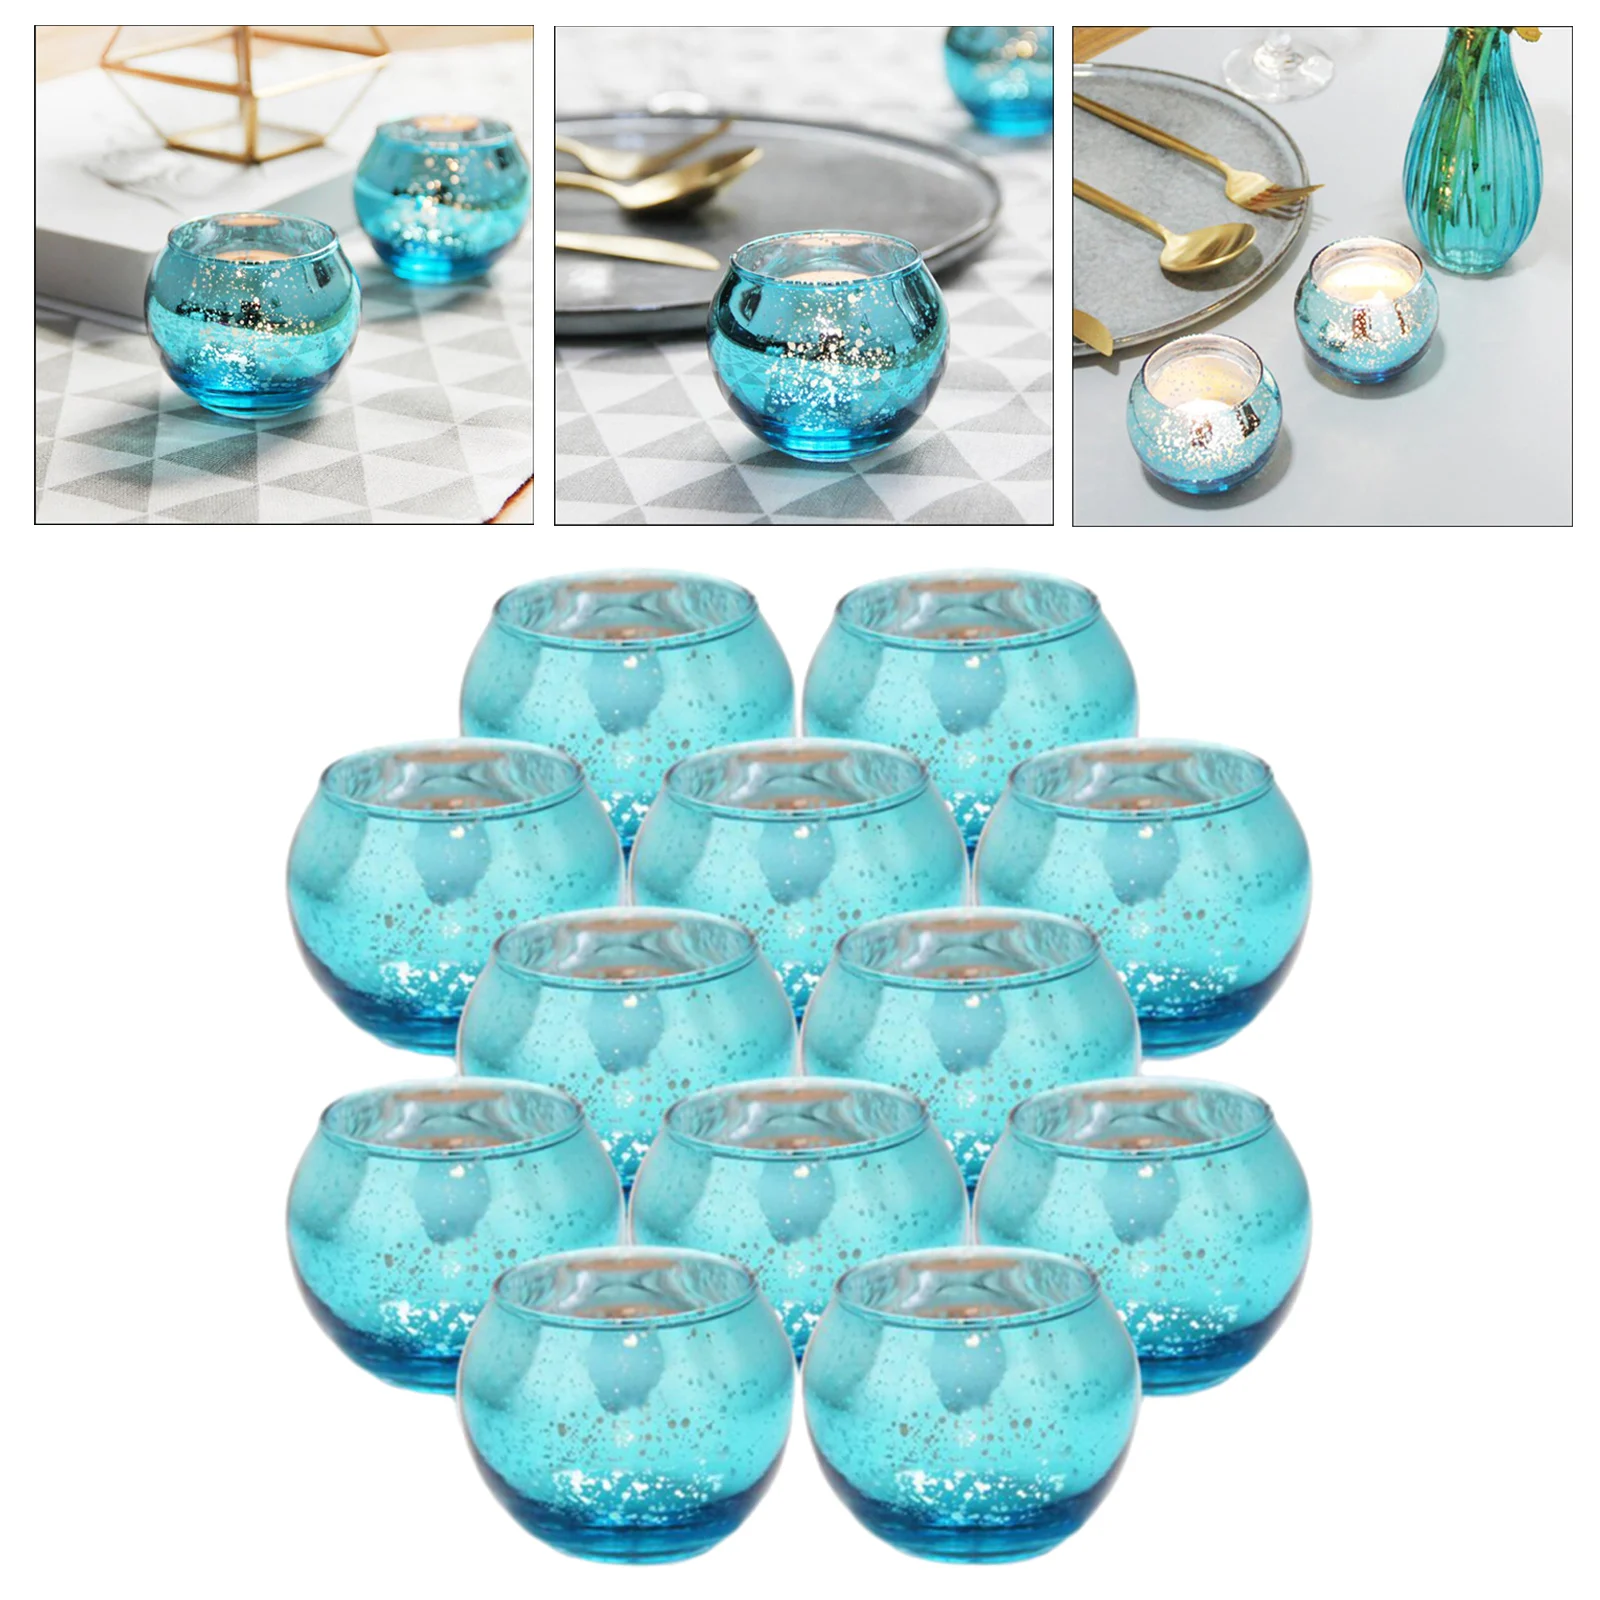 12 Pcs Mercury Glass Candle Holders Votive Tealight Candlestick Wedding Centerpieces Parties Home Decoration Gift